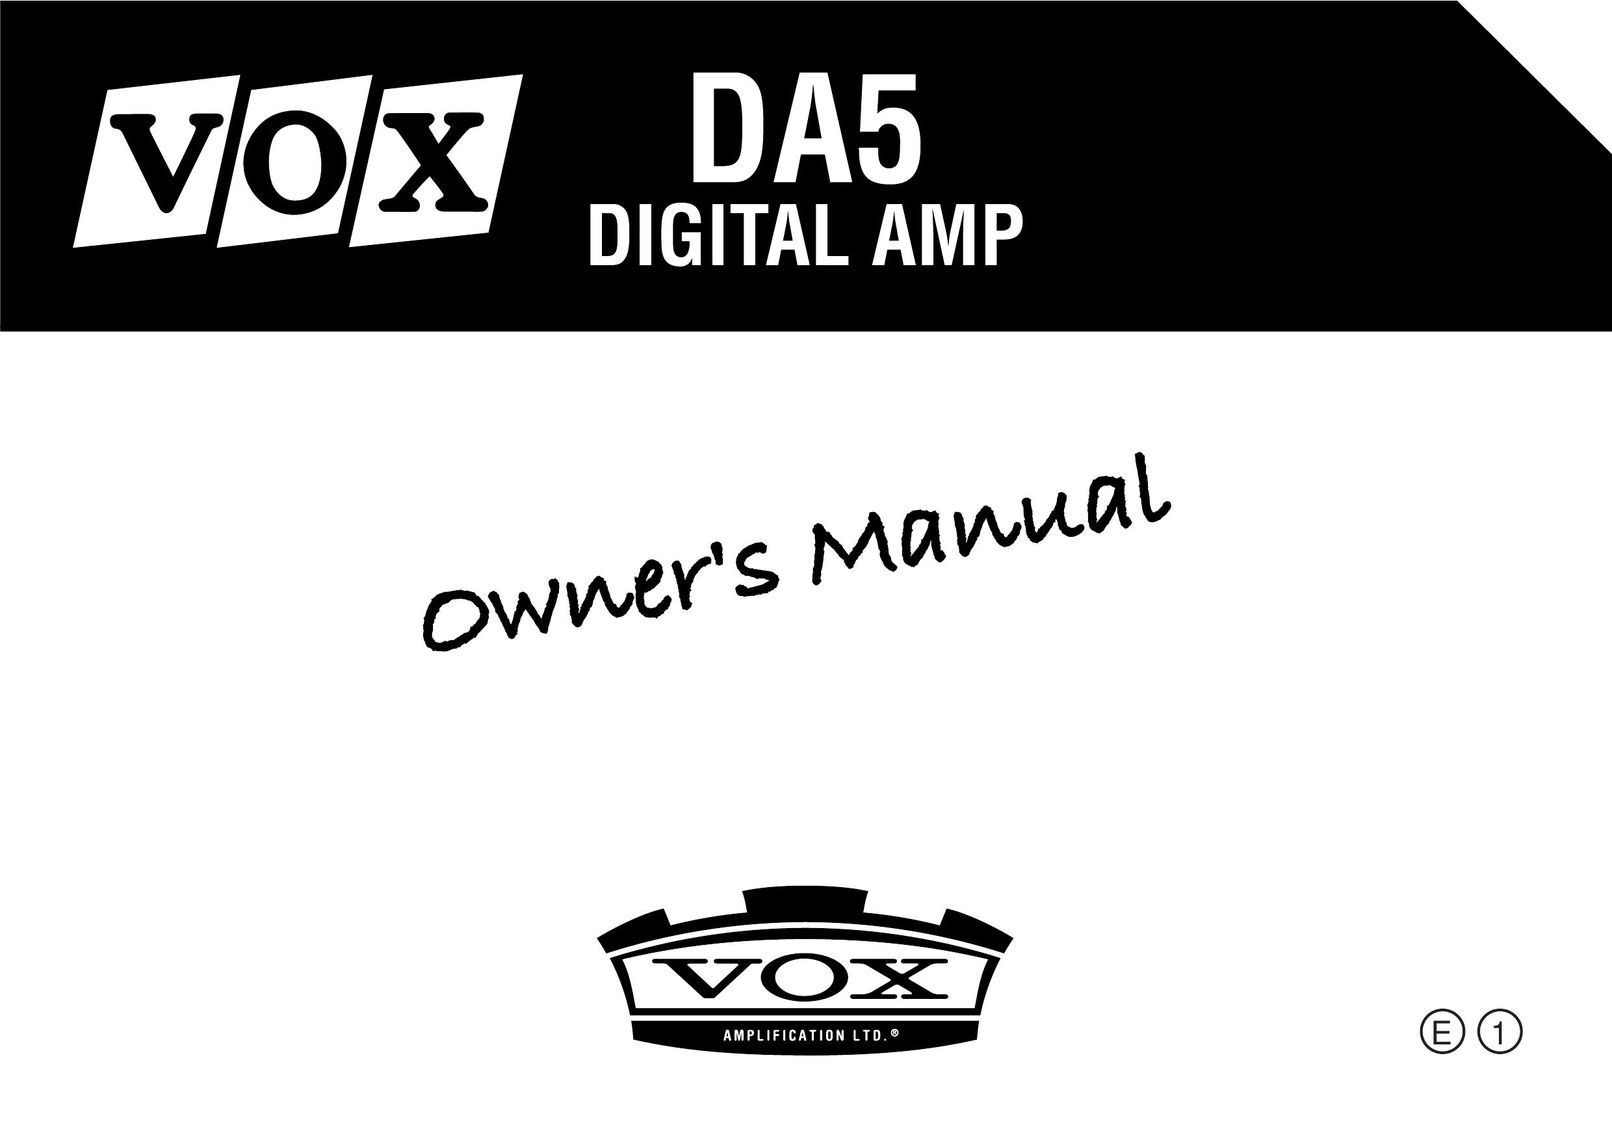 Vox DA5 Stereo Amplifier User Manual